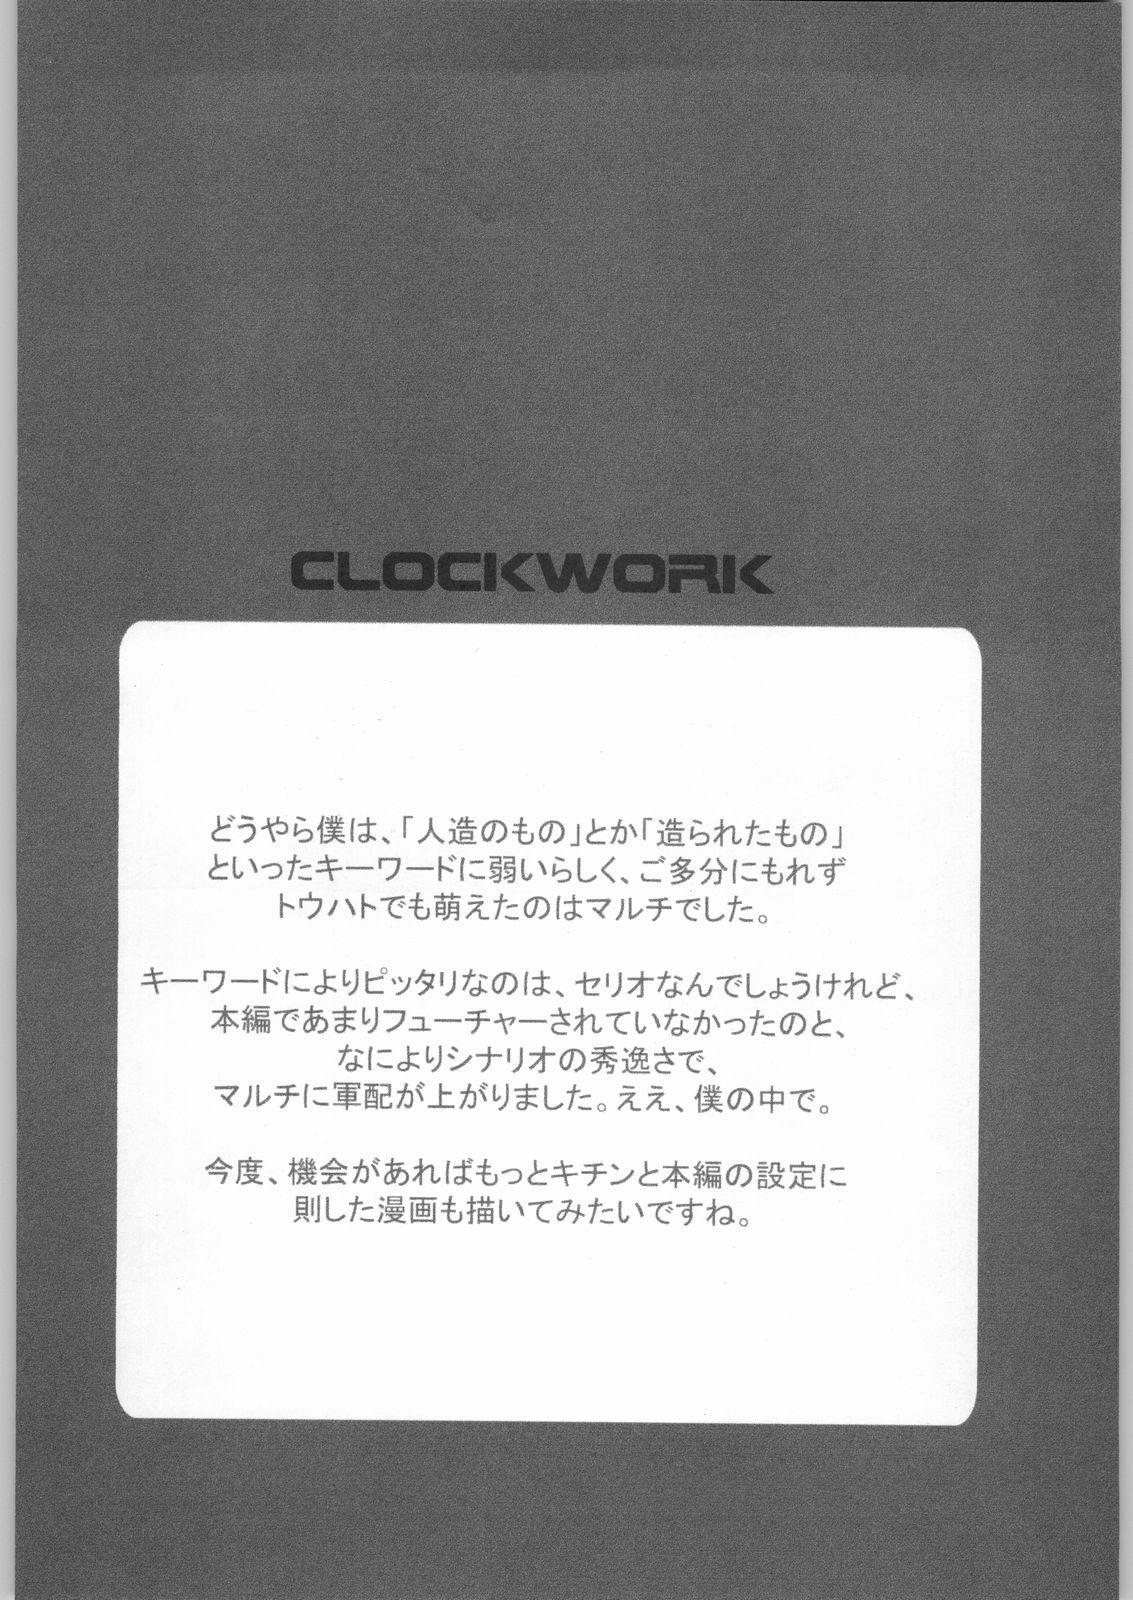 ClockWork 18